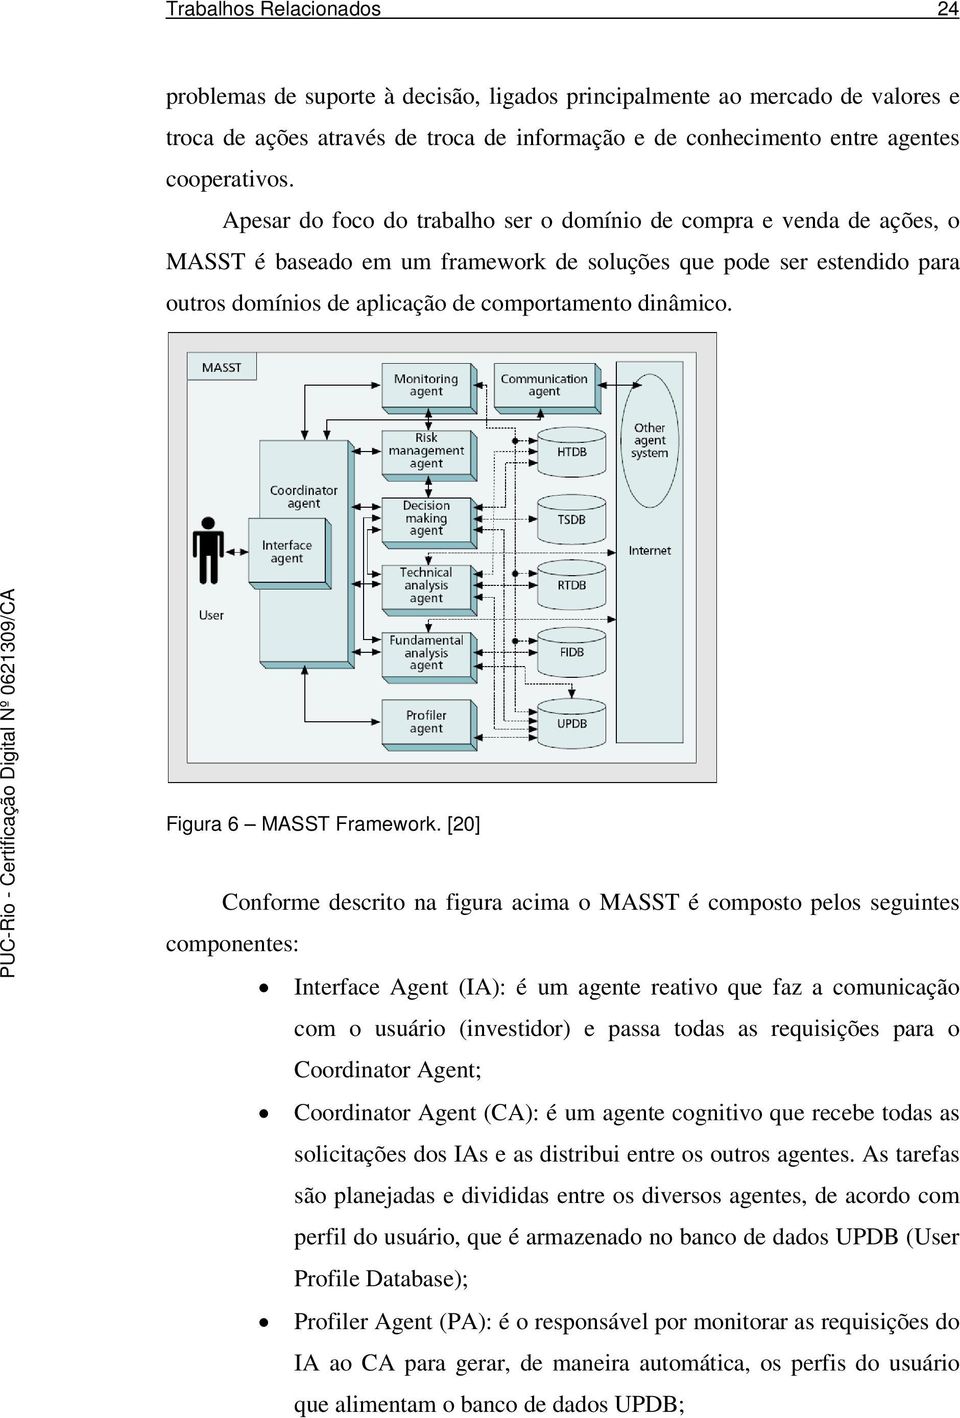 Figura 6 MASST Framework.